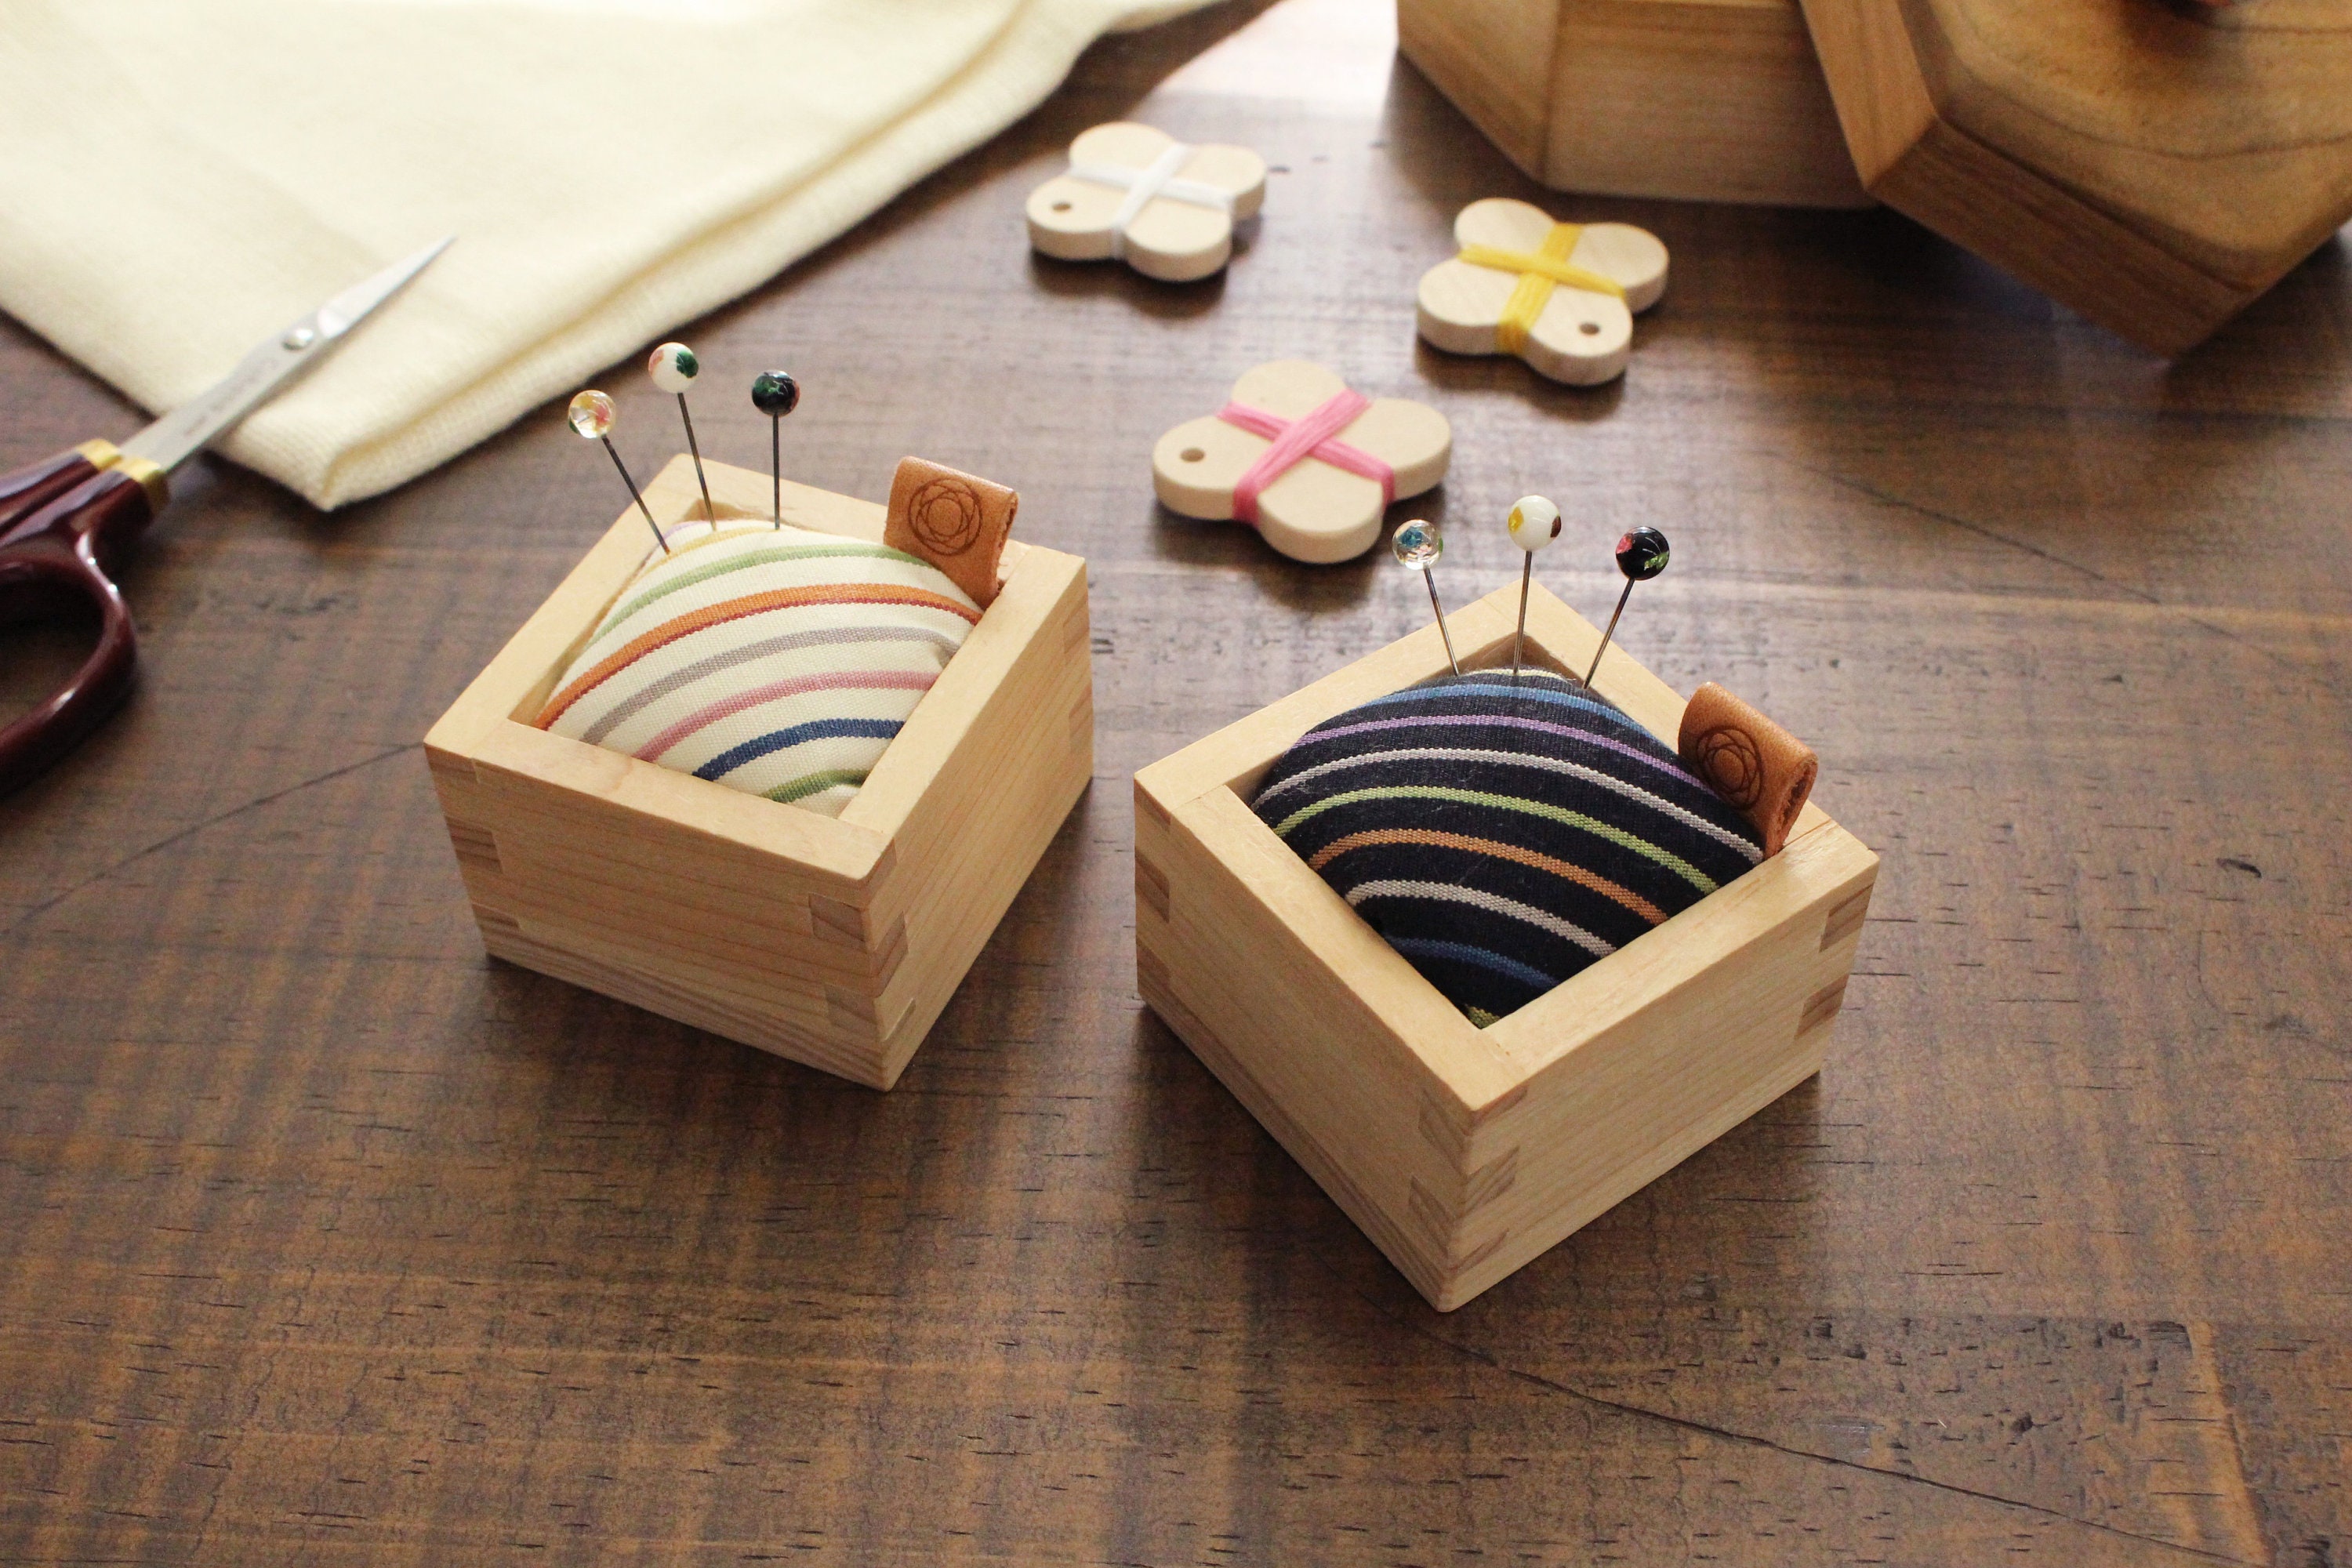 Masu Pincushion with Kokura Textile and Shippo Glass Sewing Pins – Cohana  Online Store